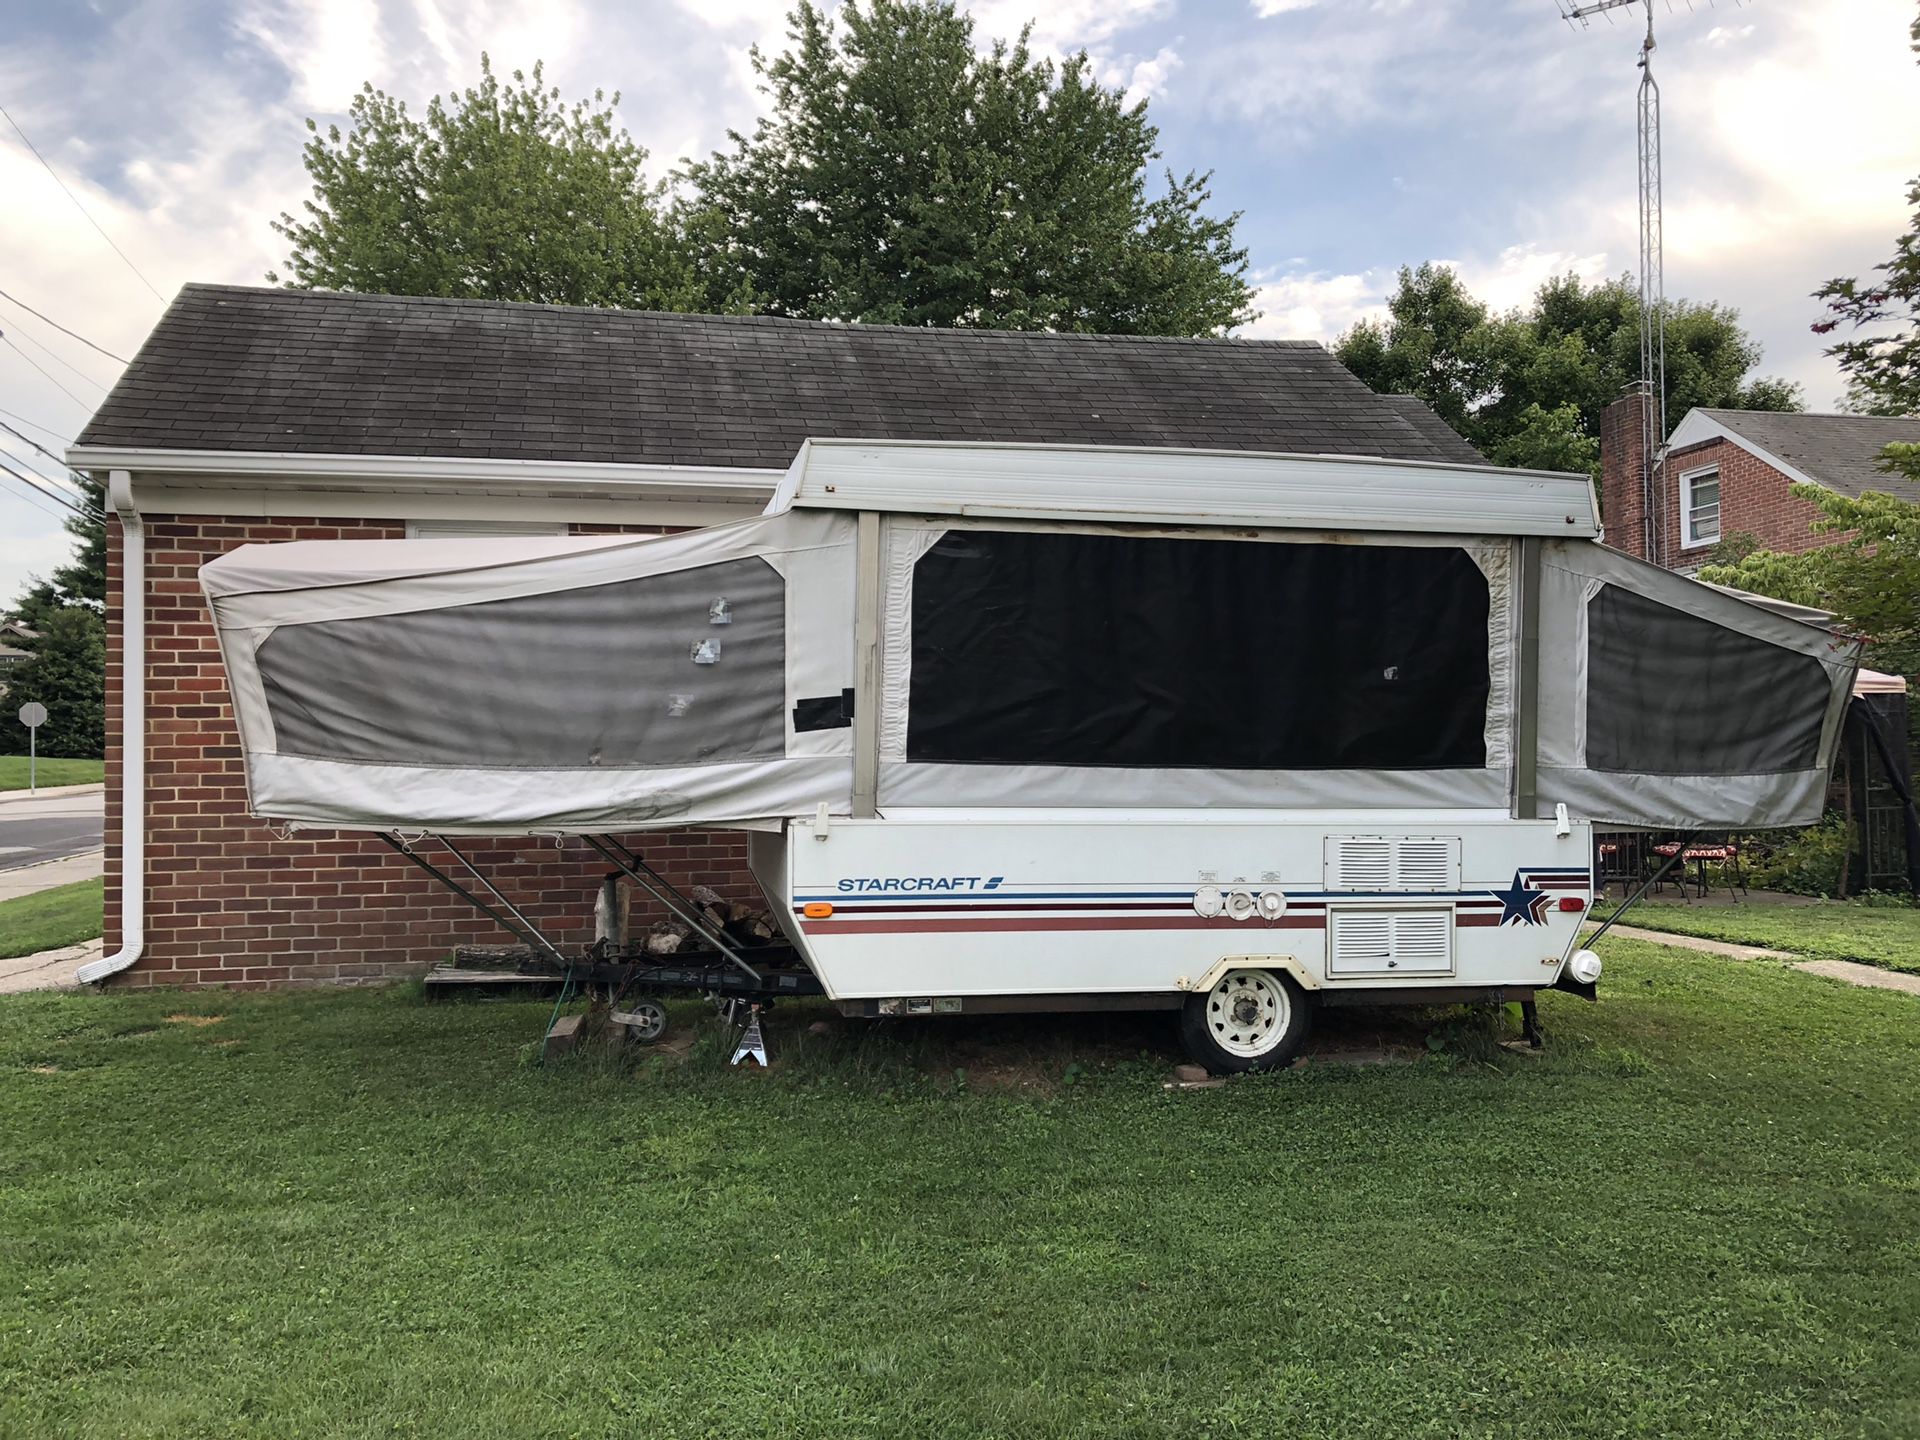 1991 starcraft pop up camper